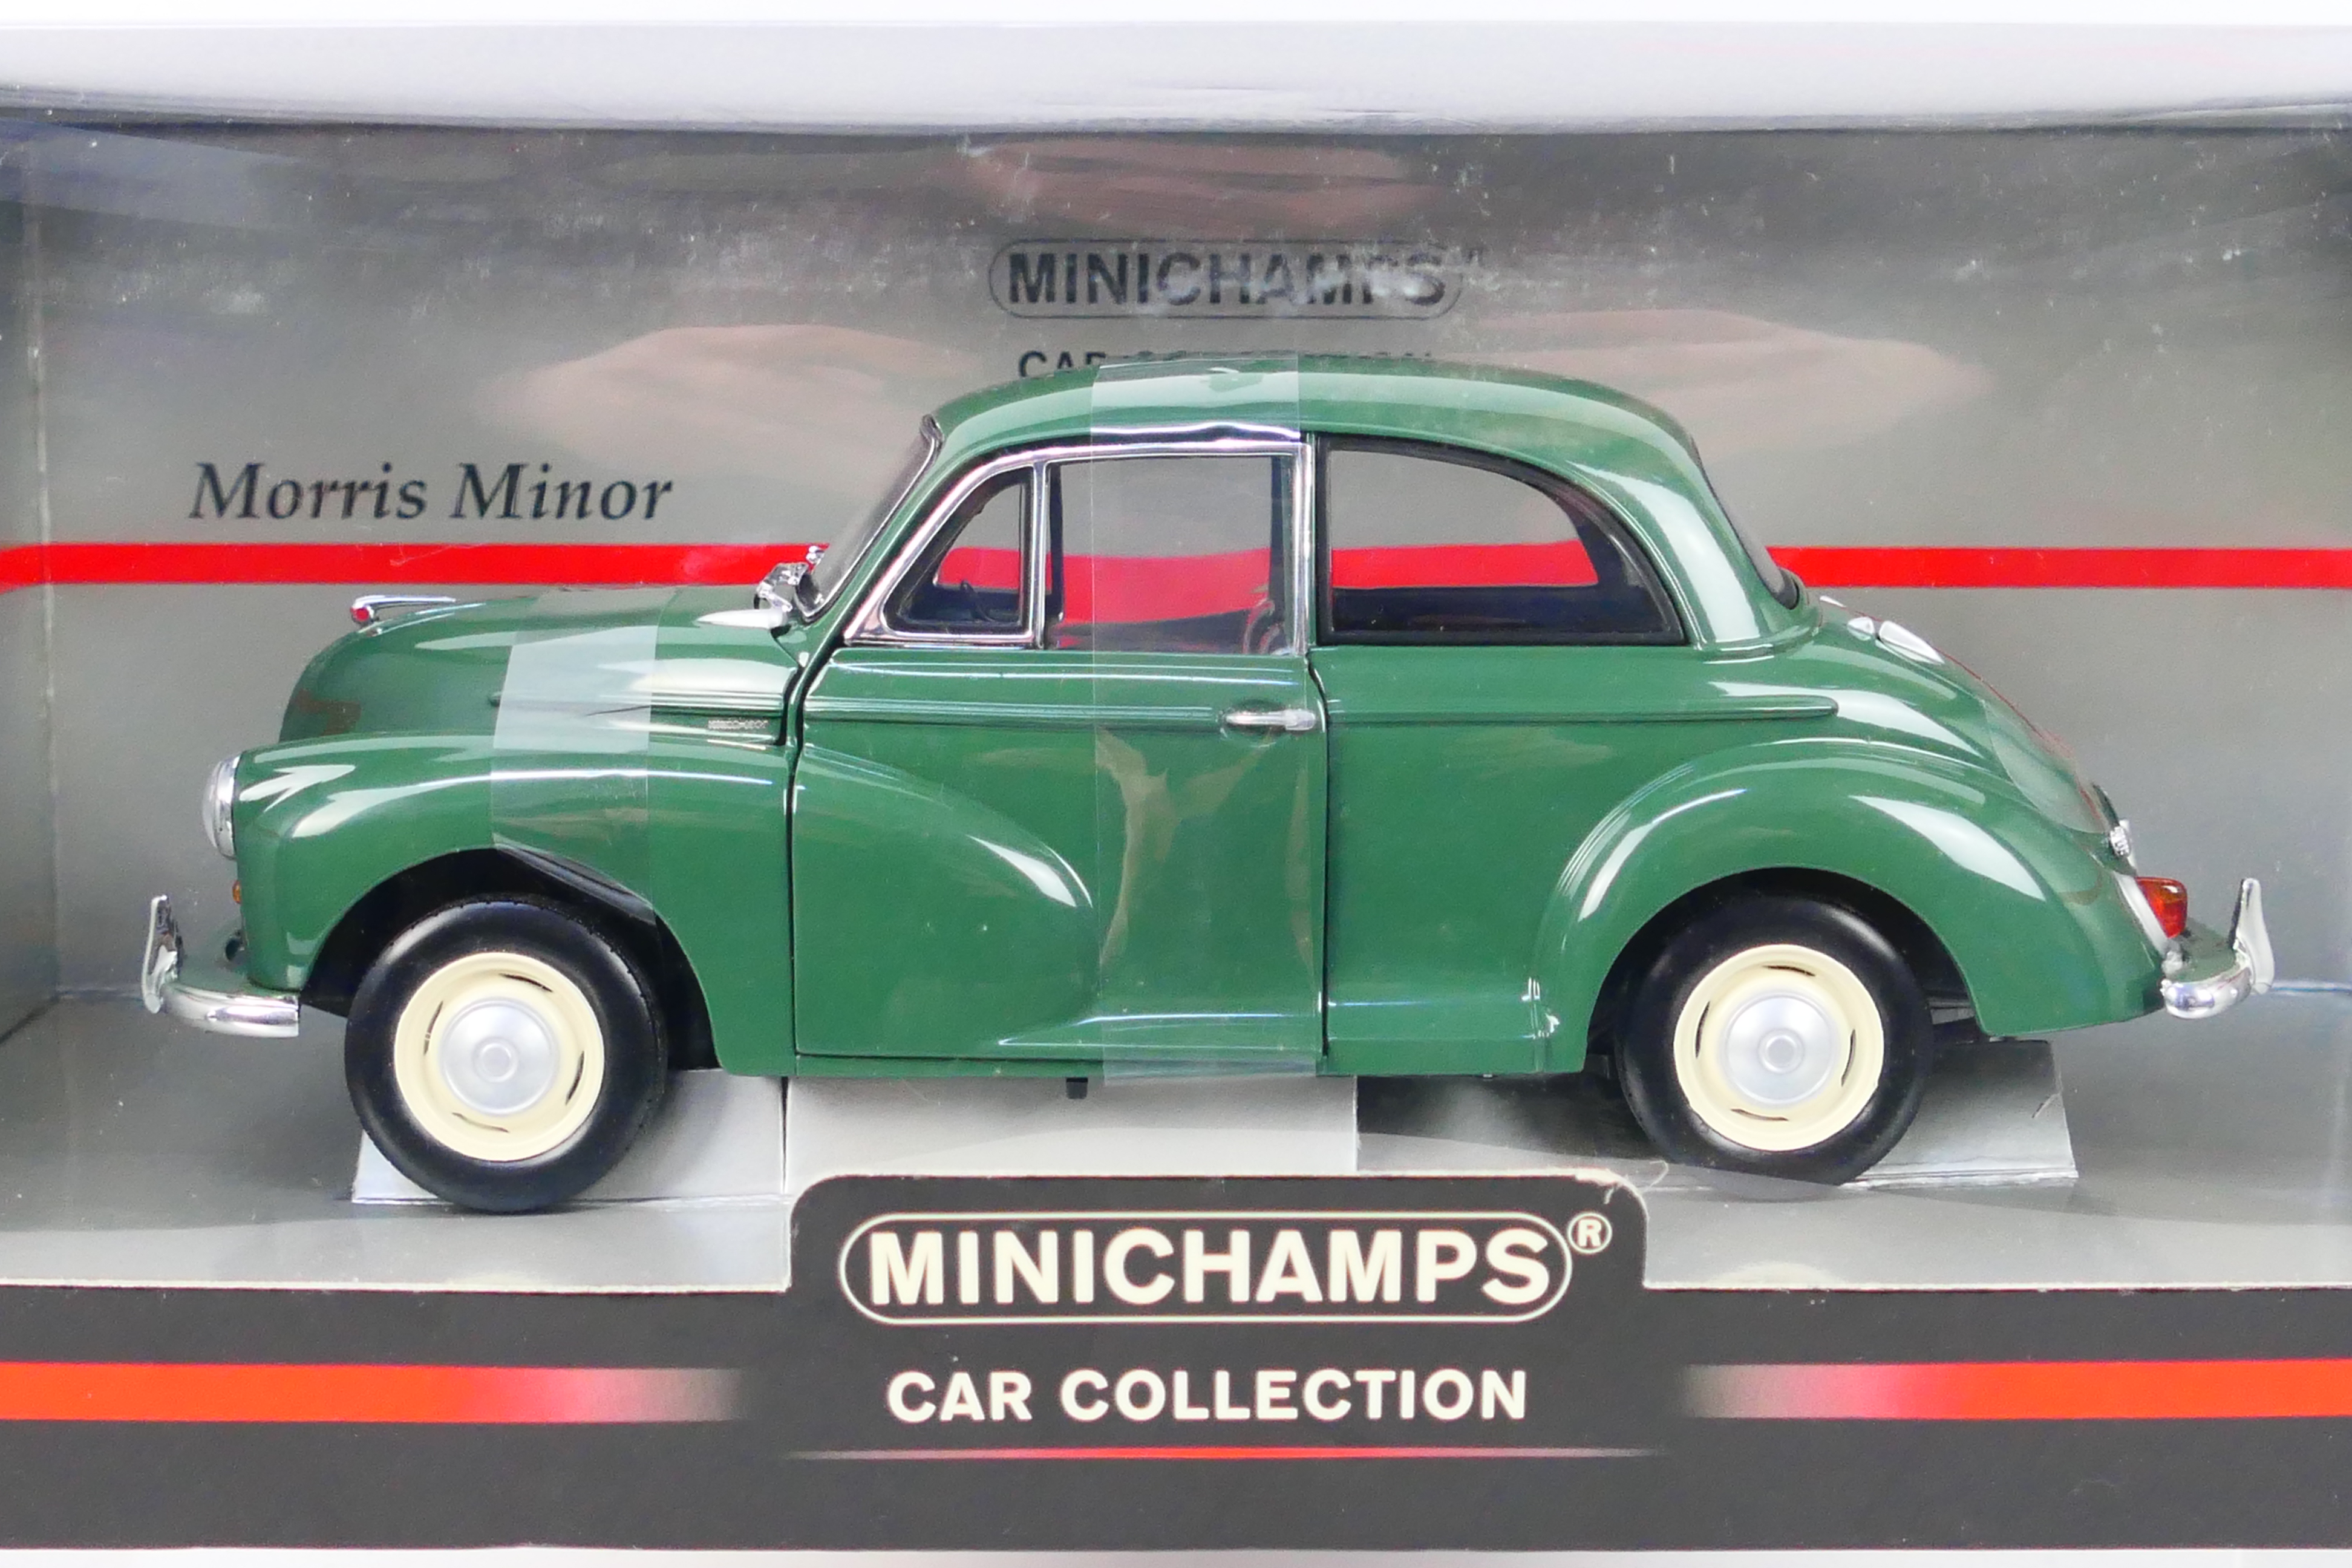 Minichamps - A boxed Minichamps 'Car Collection' #150137000 1:18 scale Morris Minor. - Image 2 of 3